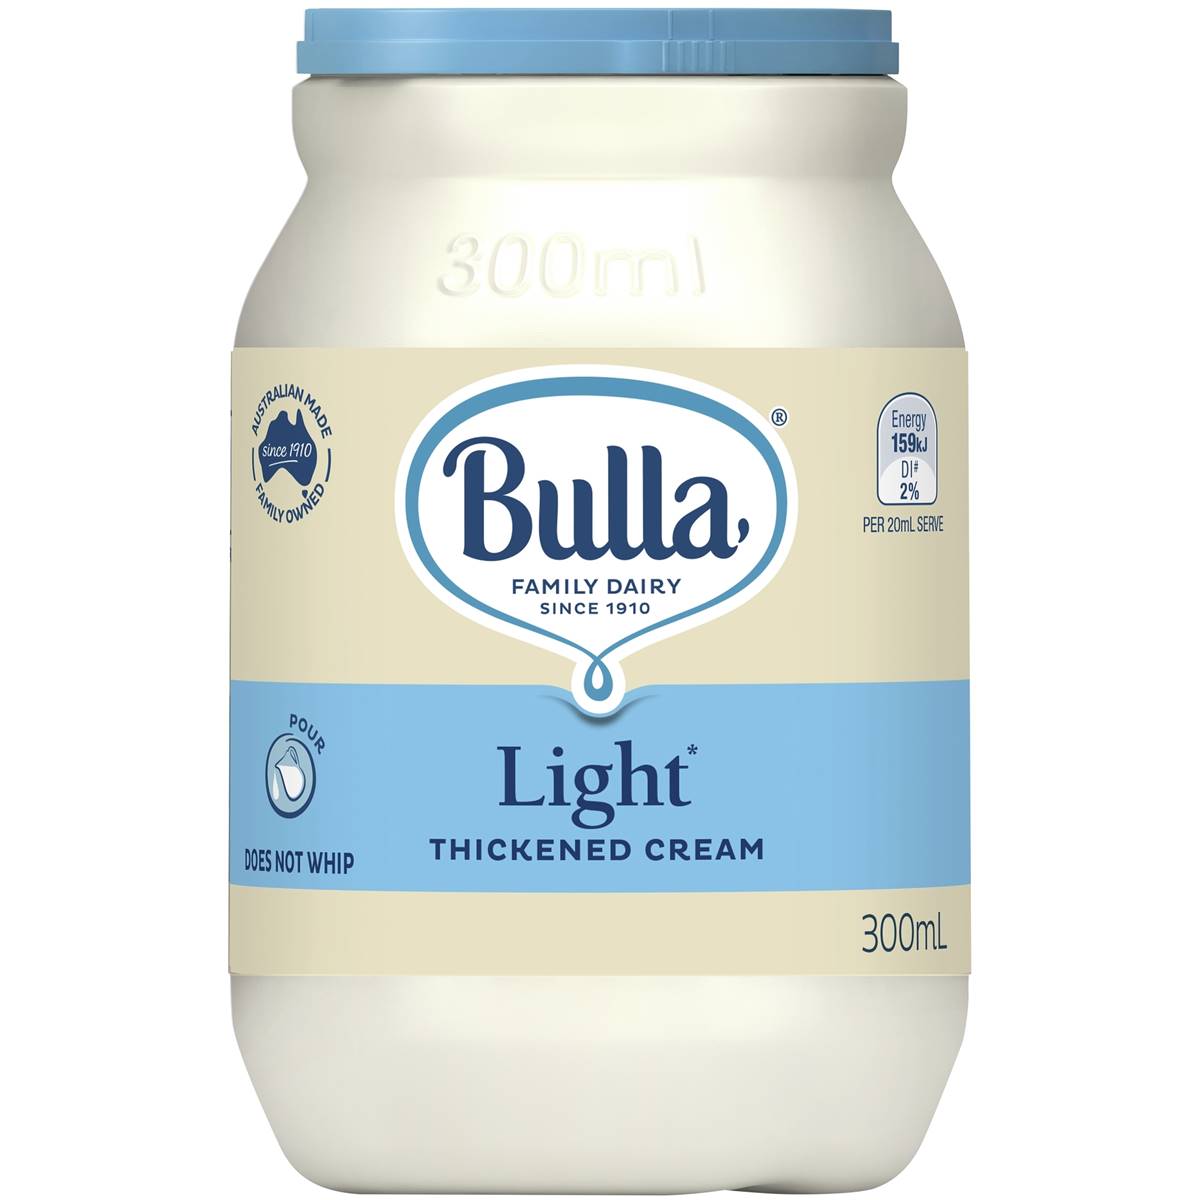 Bulla Light Thickened Cream 300ml Woolworths 